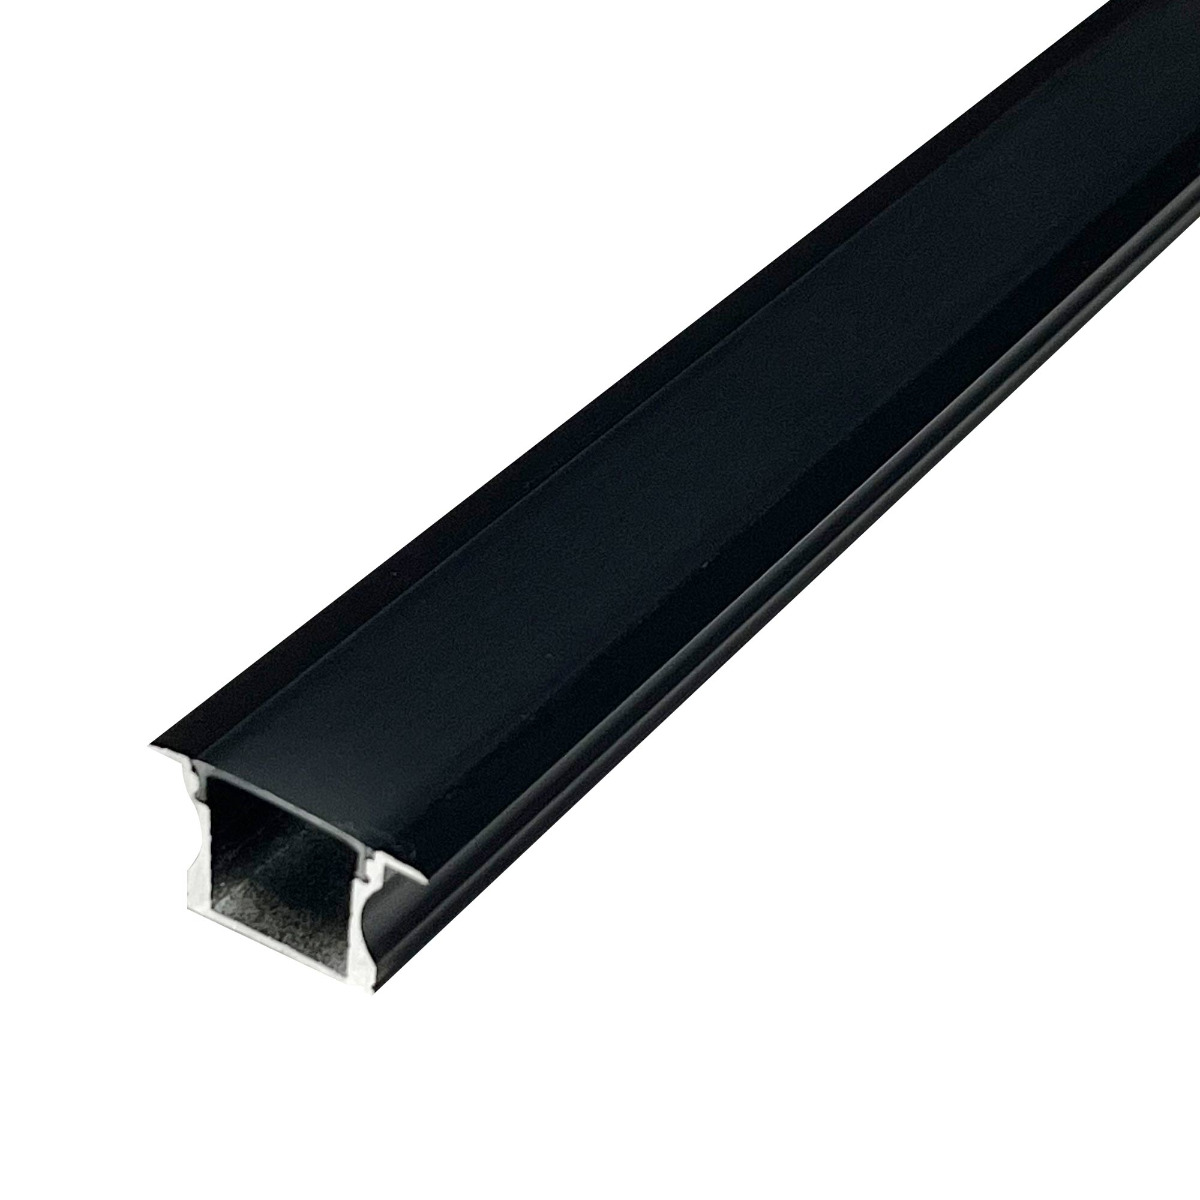 View 2m Long Black Recessed Aluminium Profile With Black Diffuser information